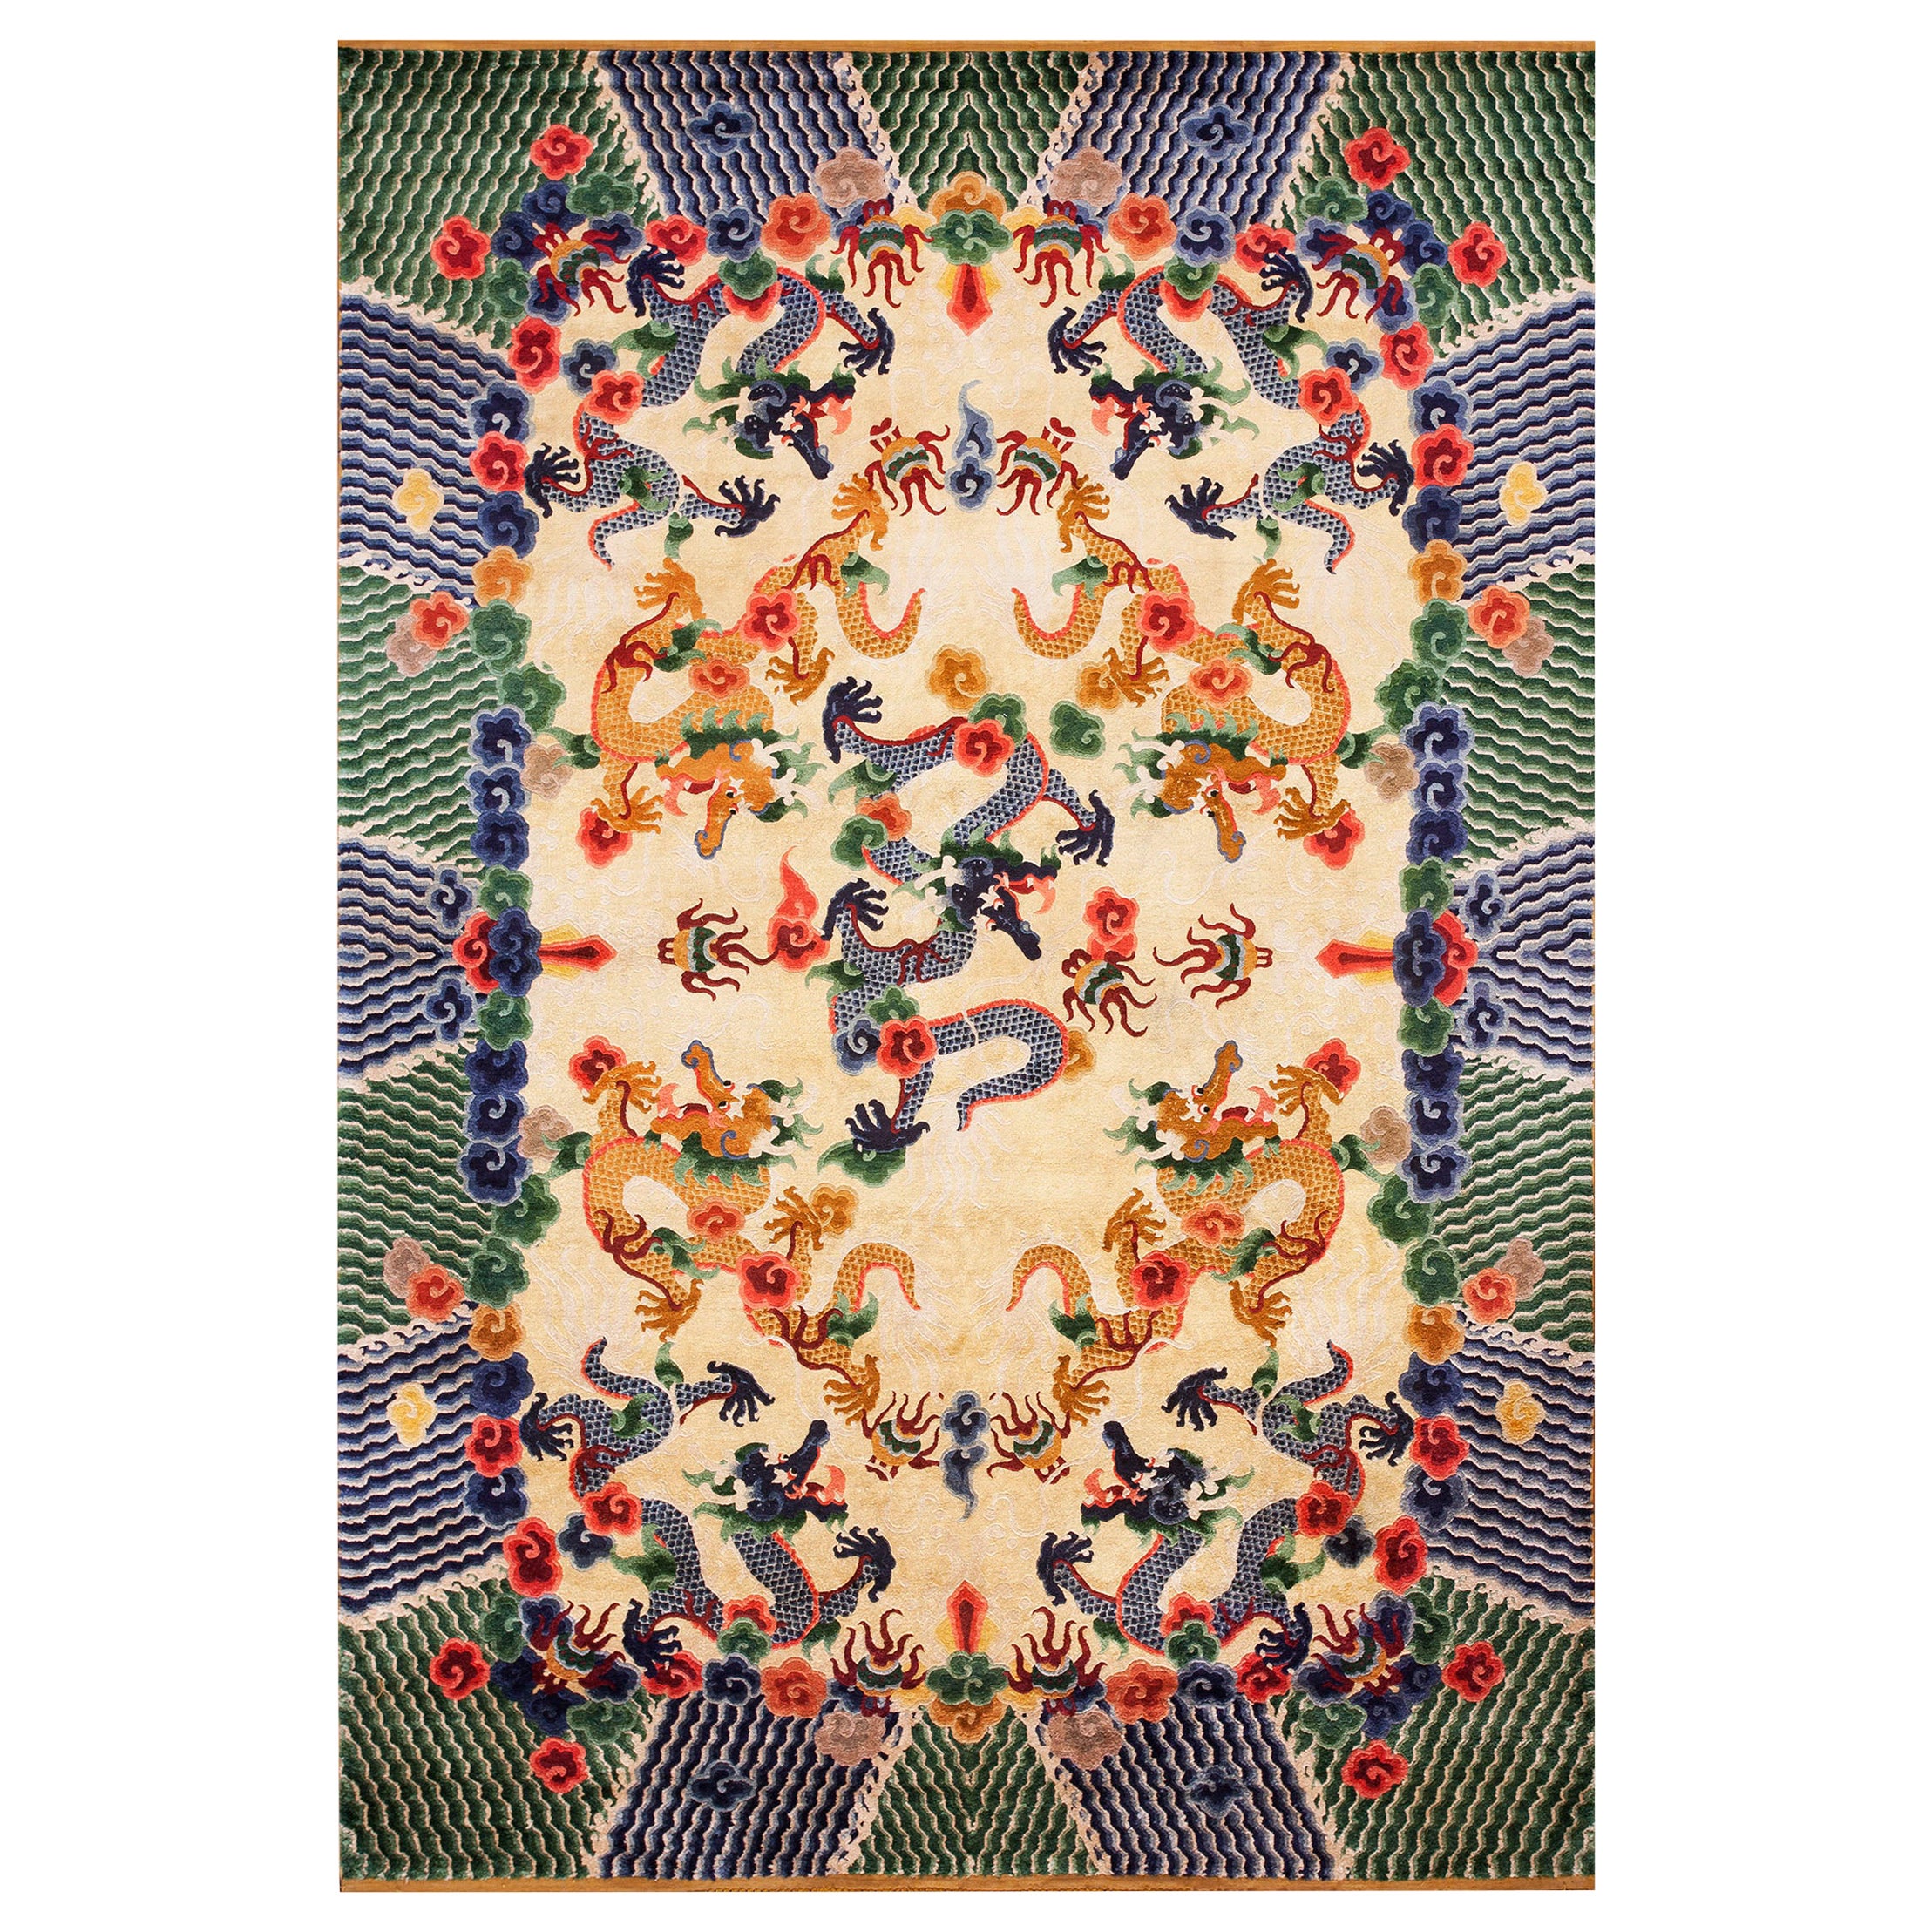 Early 20th Century Chinese Silk Dragon Carpet 